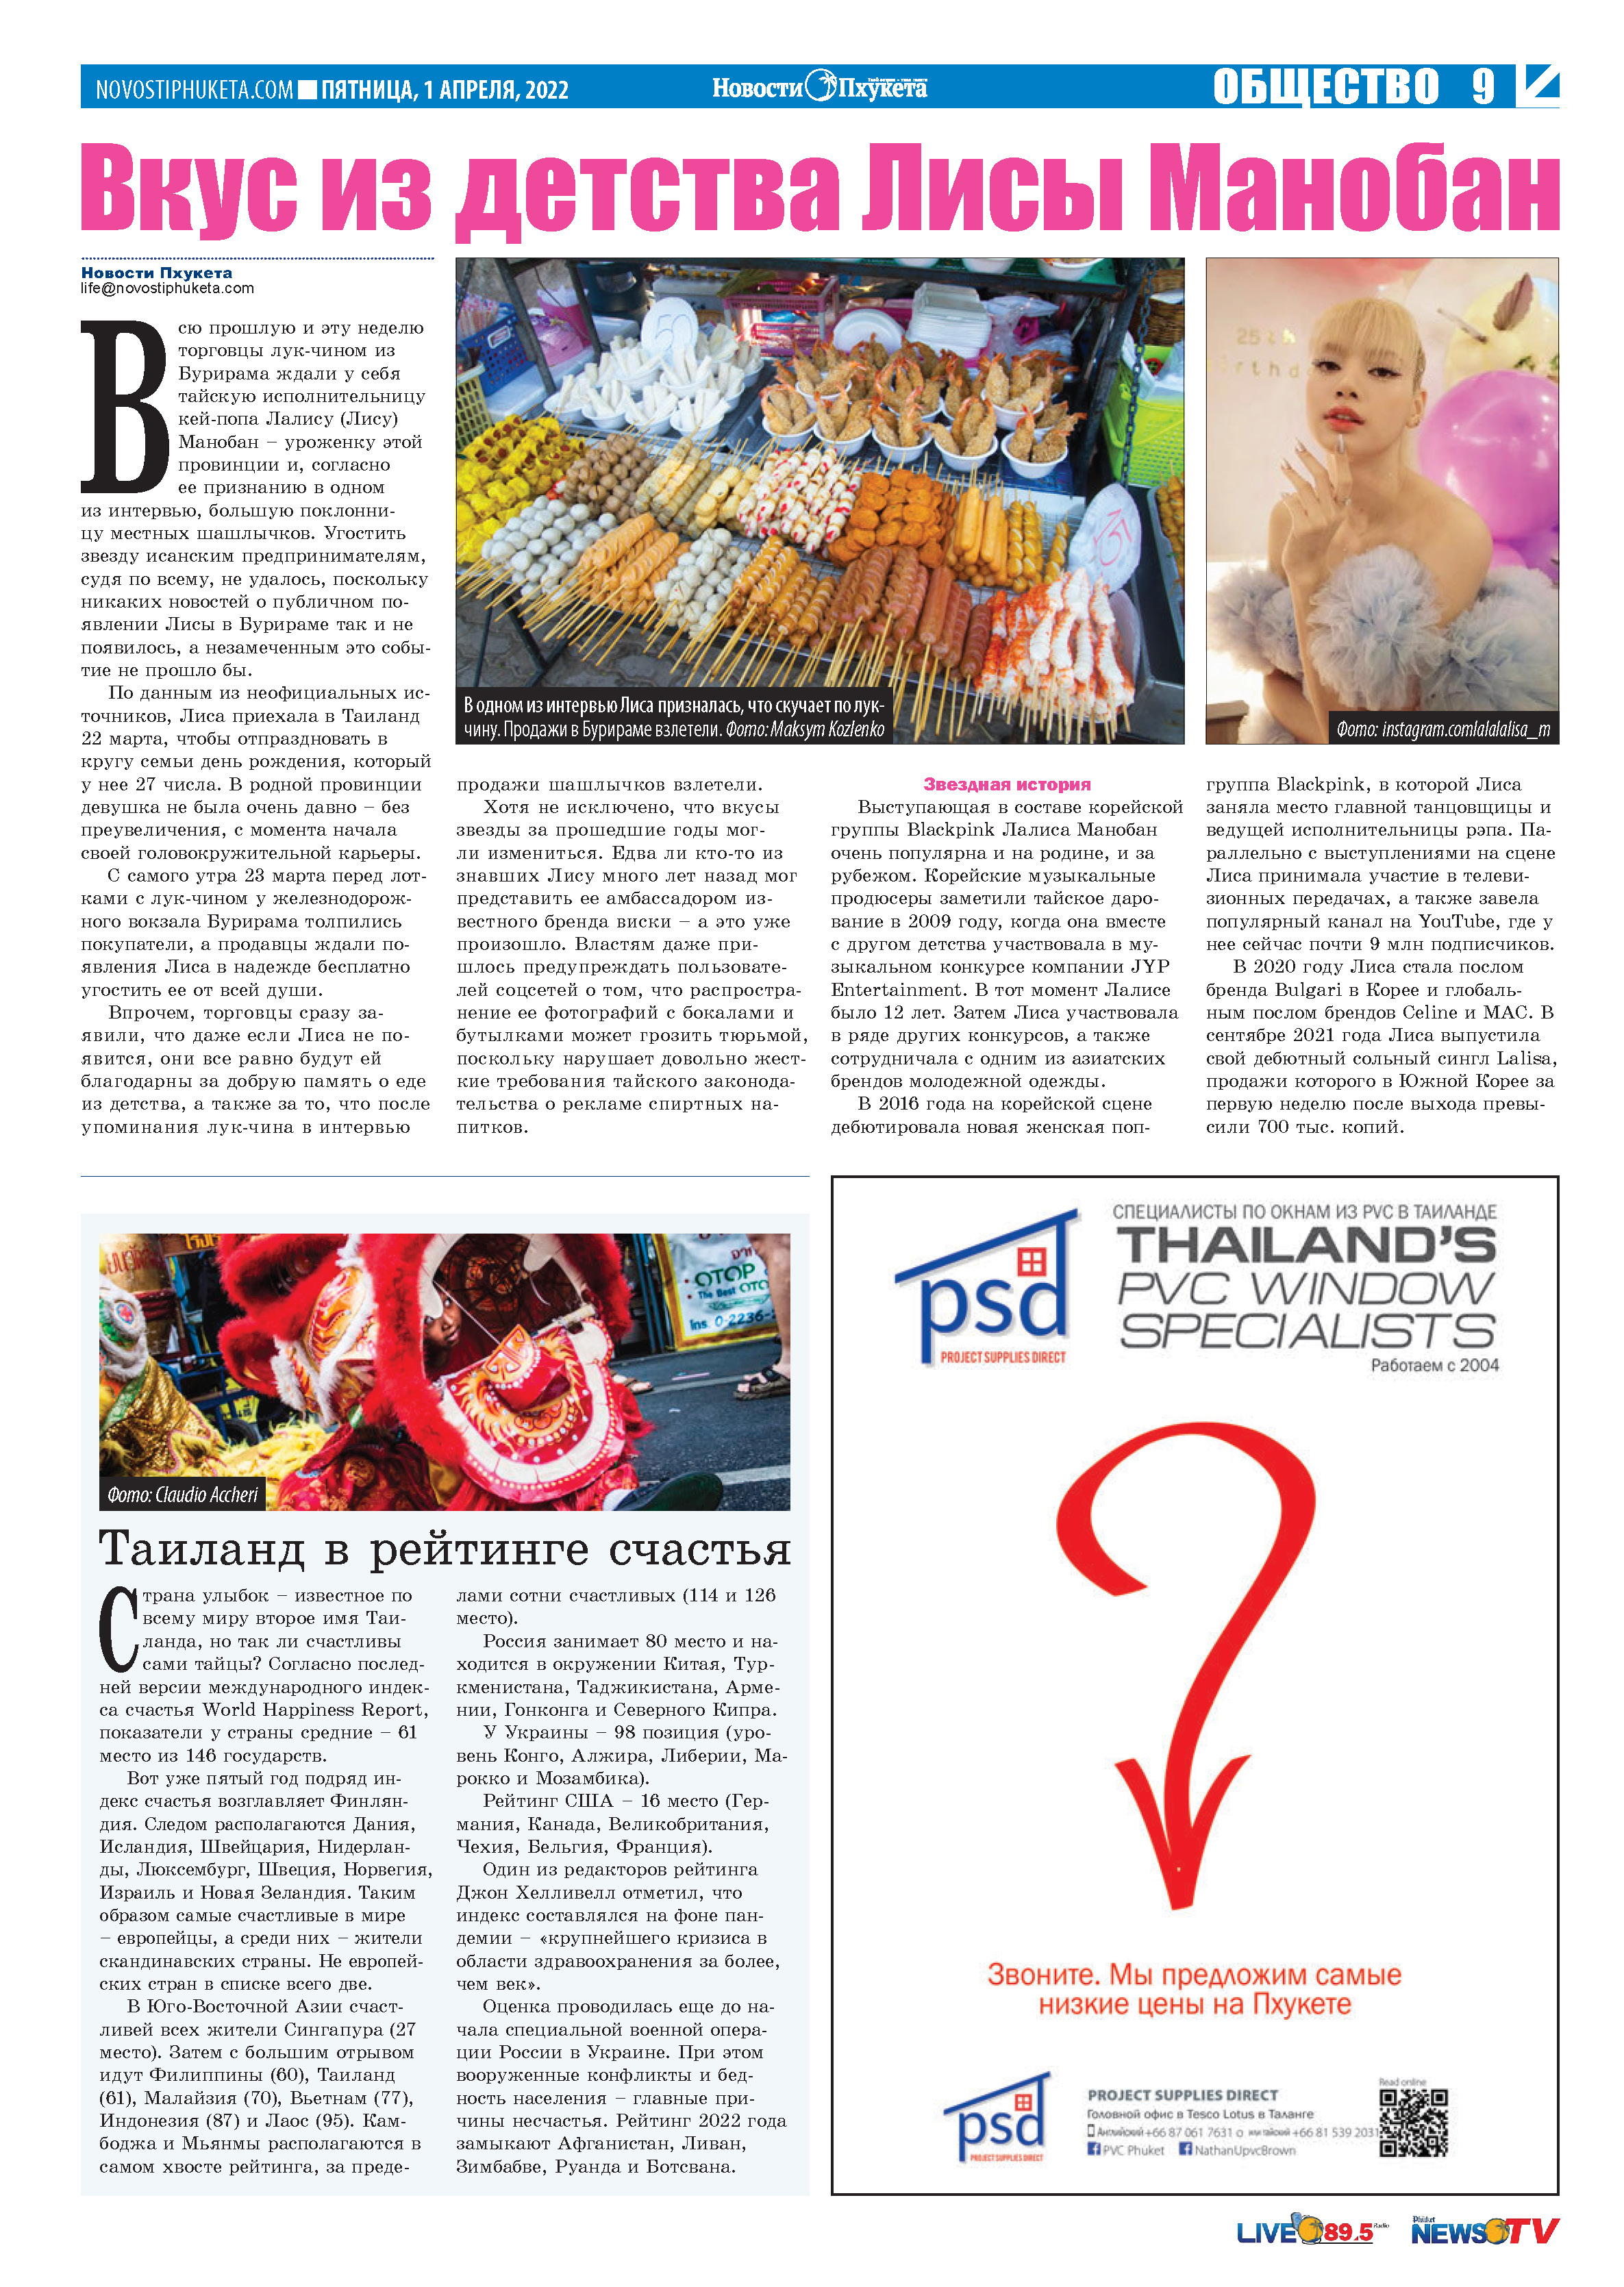 Phuket Newspaper - https://www.novostiphuketa.com/archive/01-04-2022/01-04-2022_Page_09.jpg